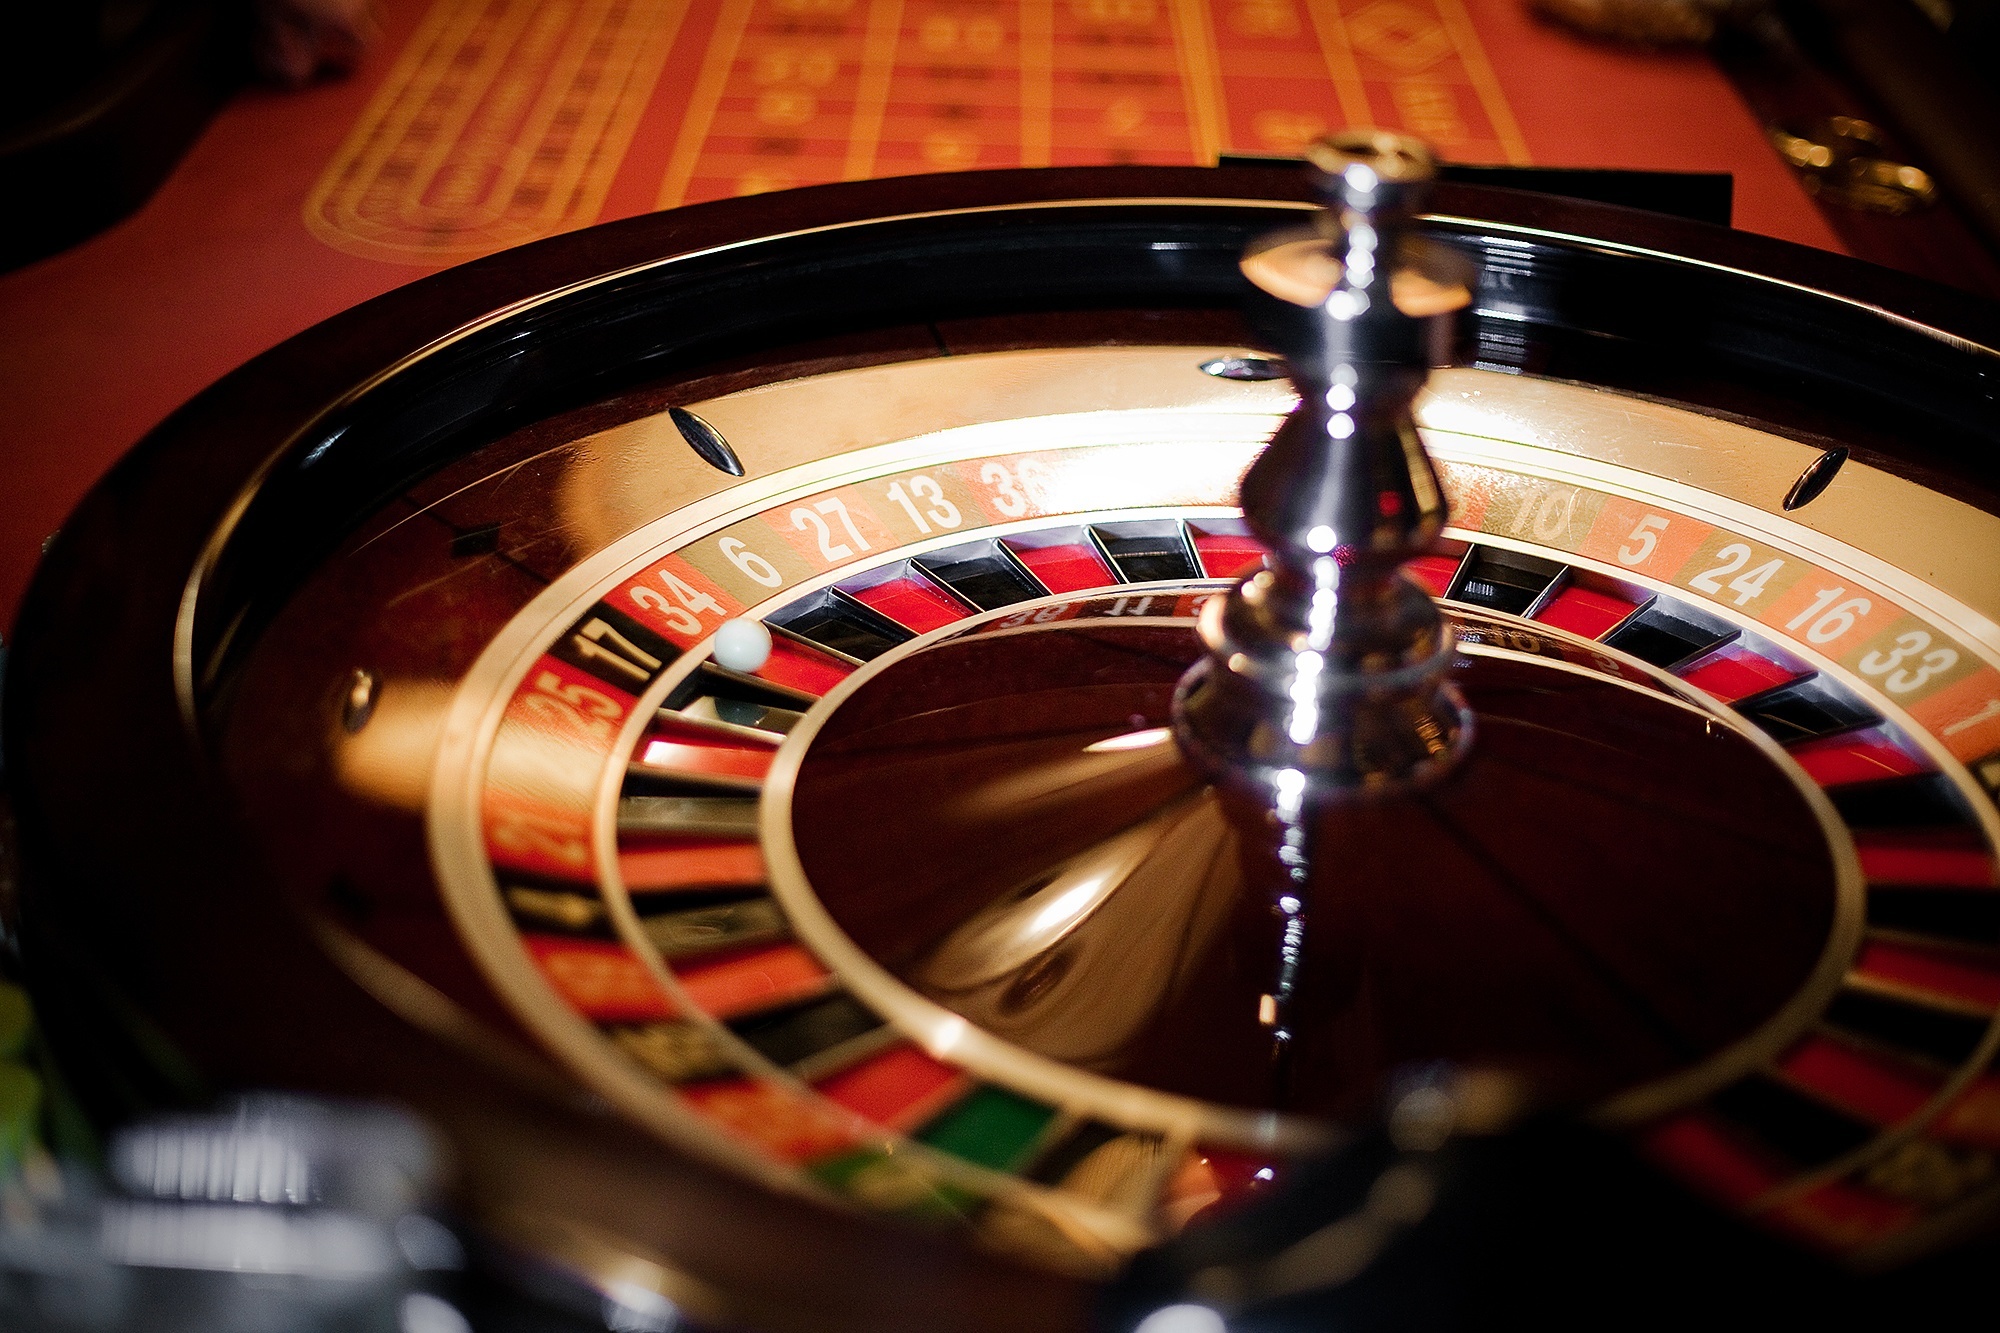 Rtl spiele jackpot online casino